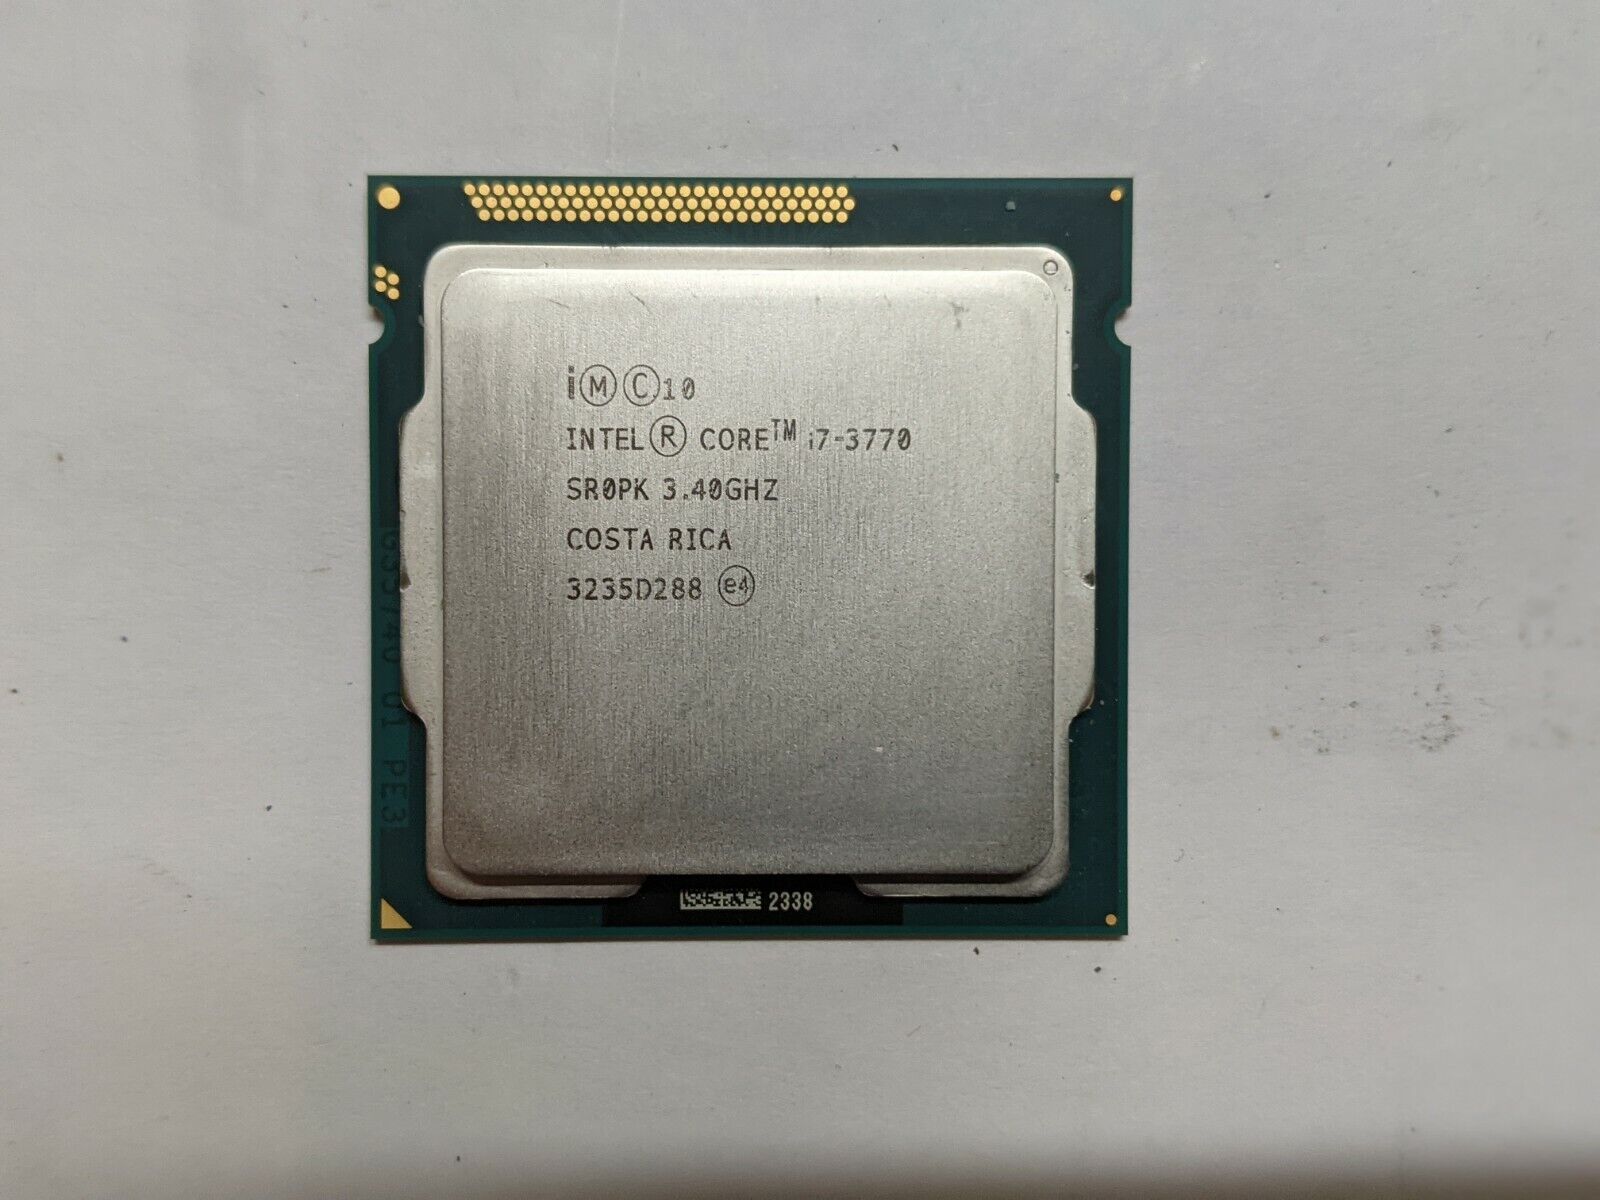 Intel Core i7-3770 3.40GHz Socket LGA1155 Desktop CPU SR0PK